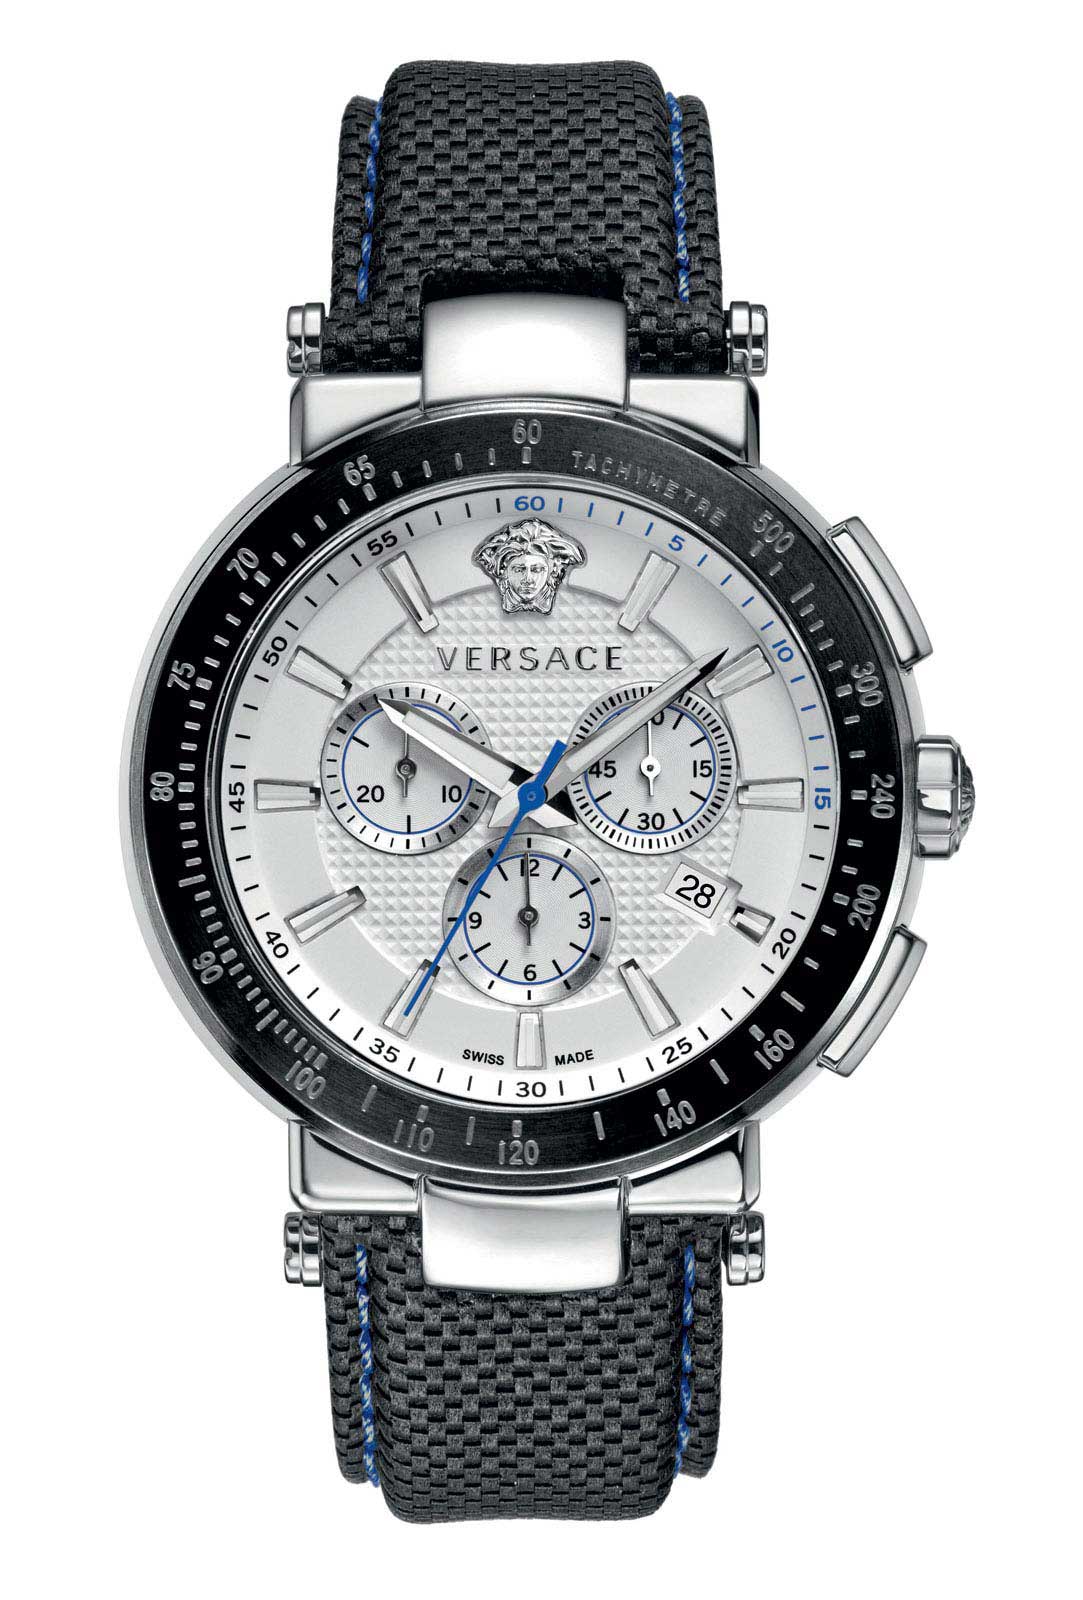 Versace QUARTZ CHRONO watch 5030D STEEL WHITE - Click Image to Close